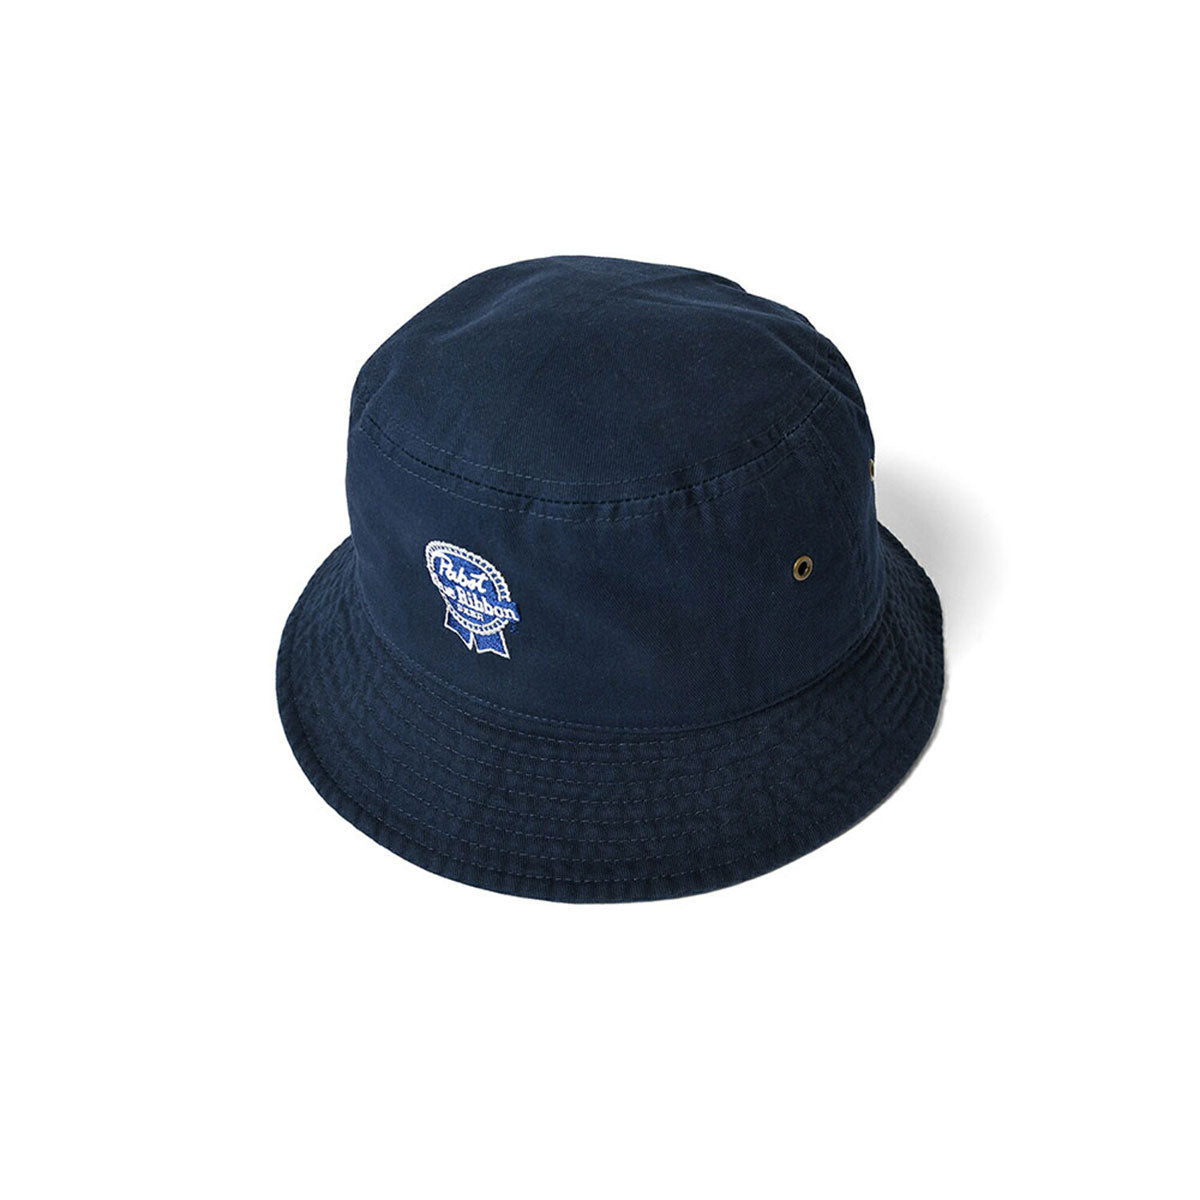 PABST BLUE RIBBON LOGO BUCKET HAT NAVY【PB211405】